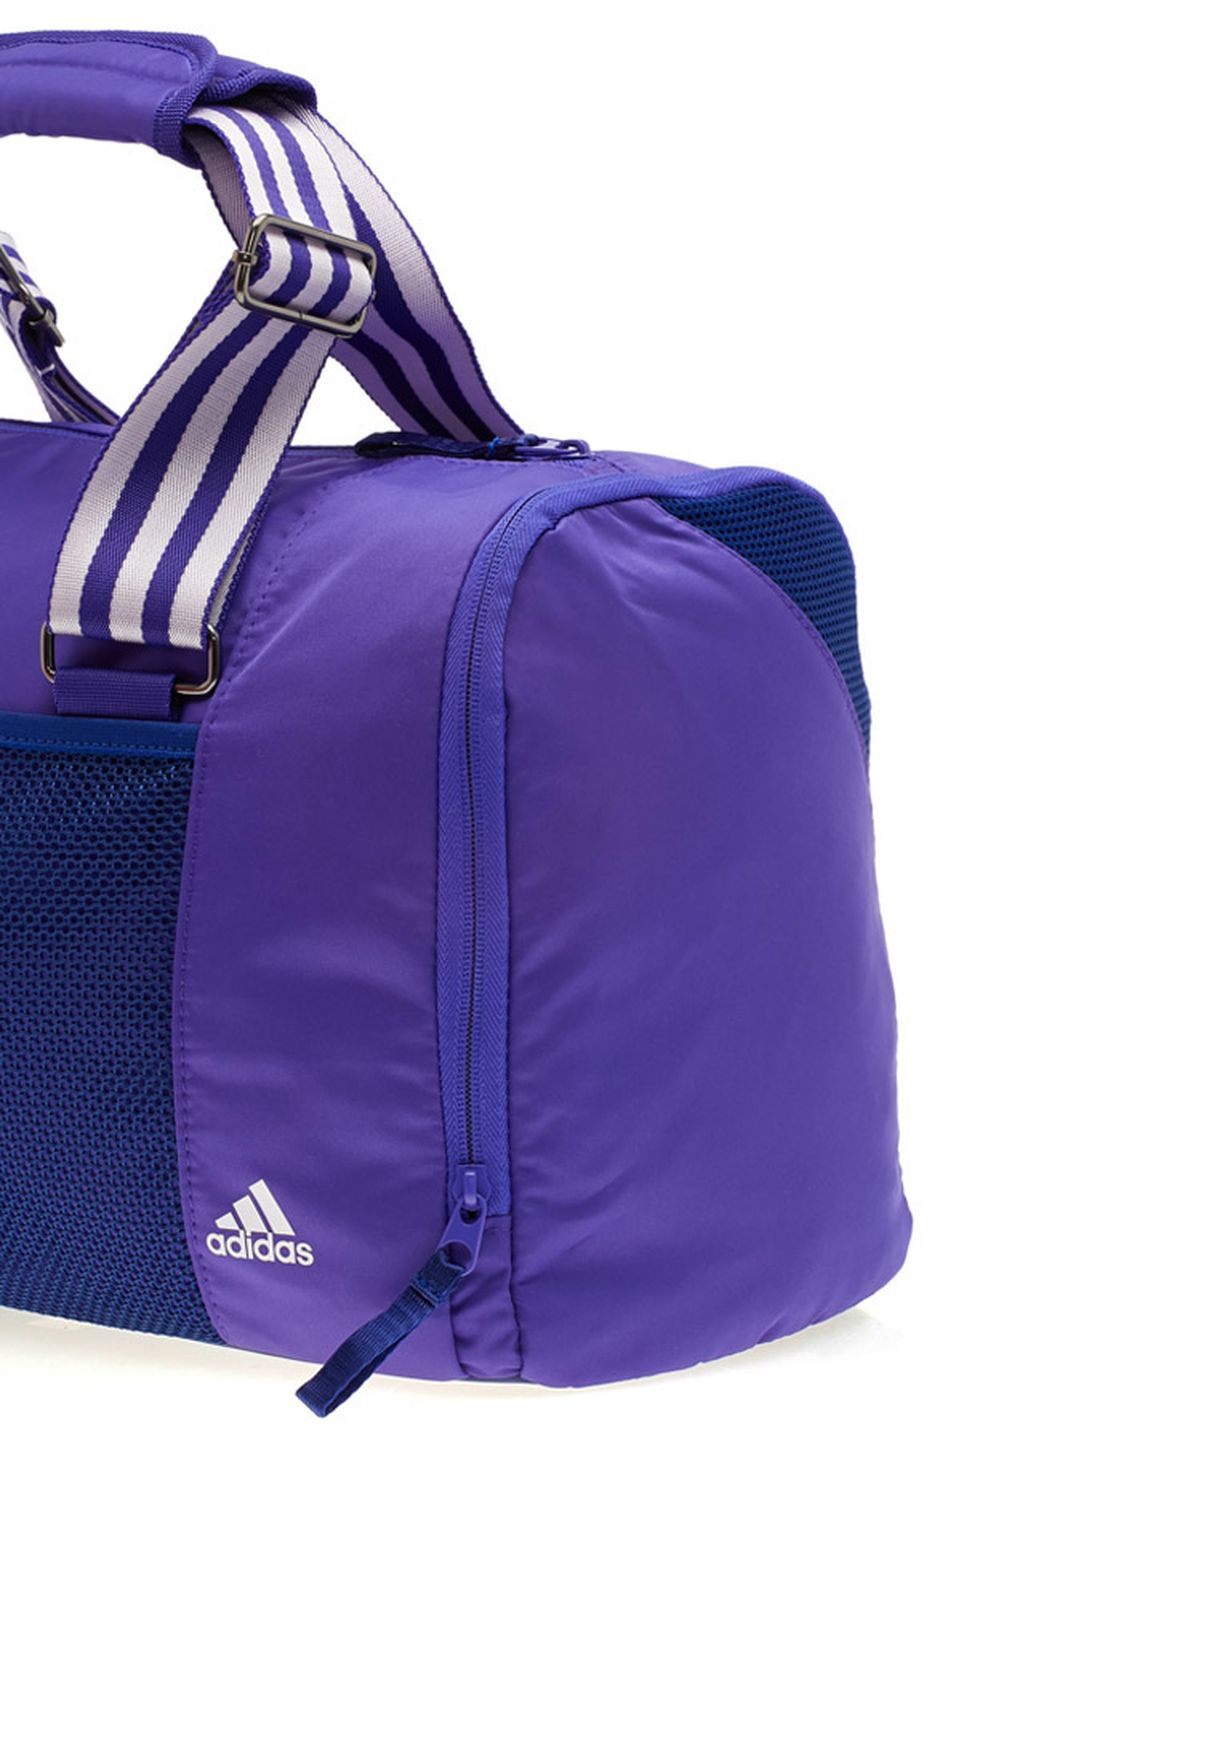 purple adidas duffle bag